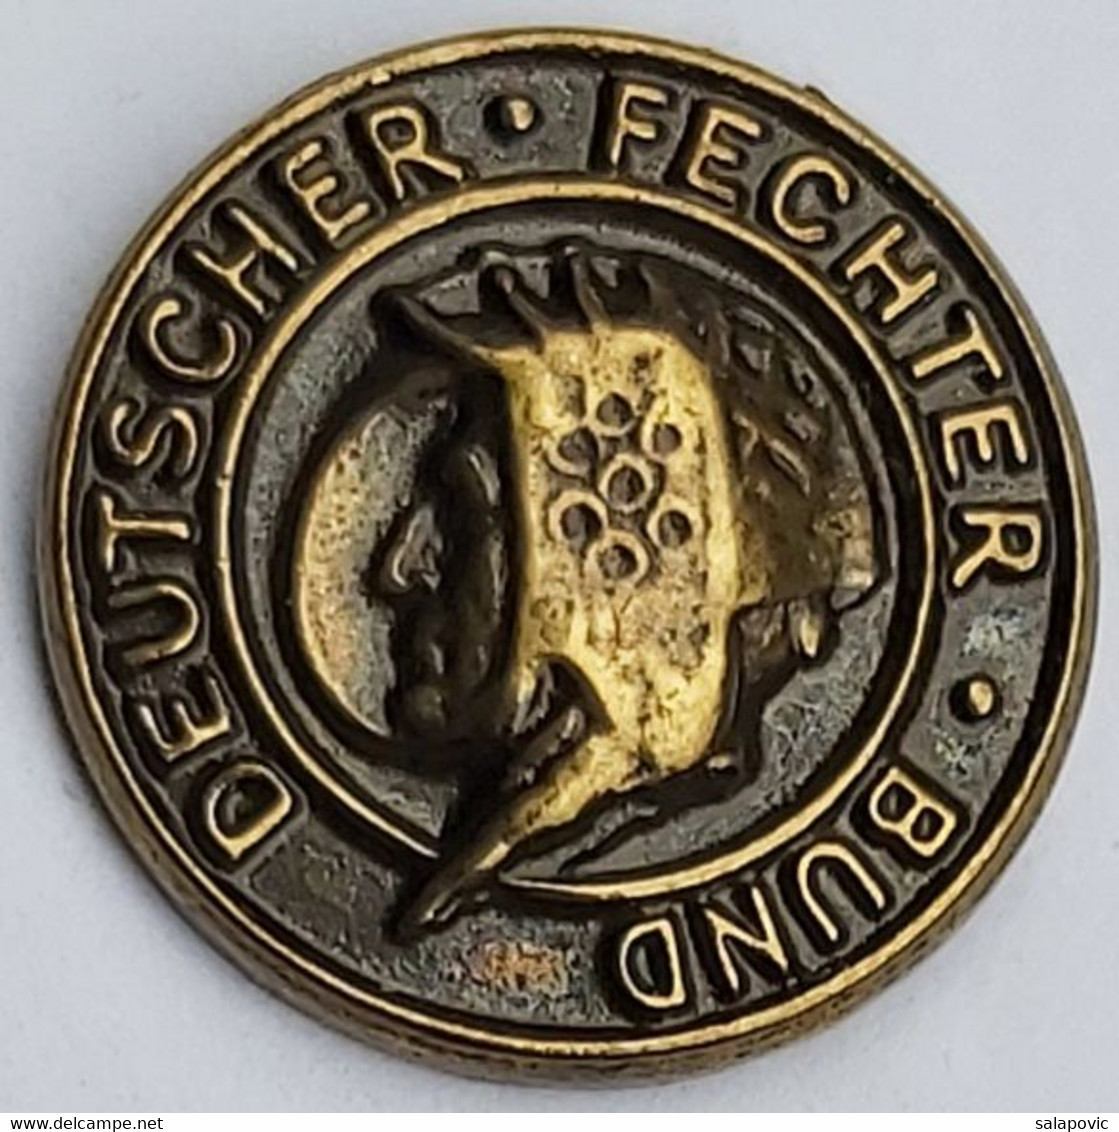 Deutsche Fechter-Bund Germany Fencing Federation Association Union PINS A10/10 - Esgrima